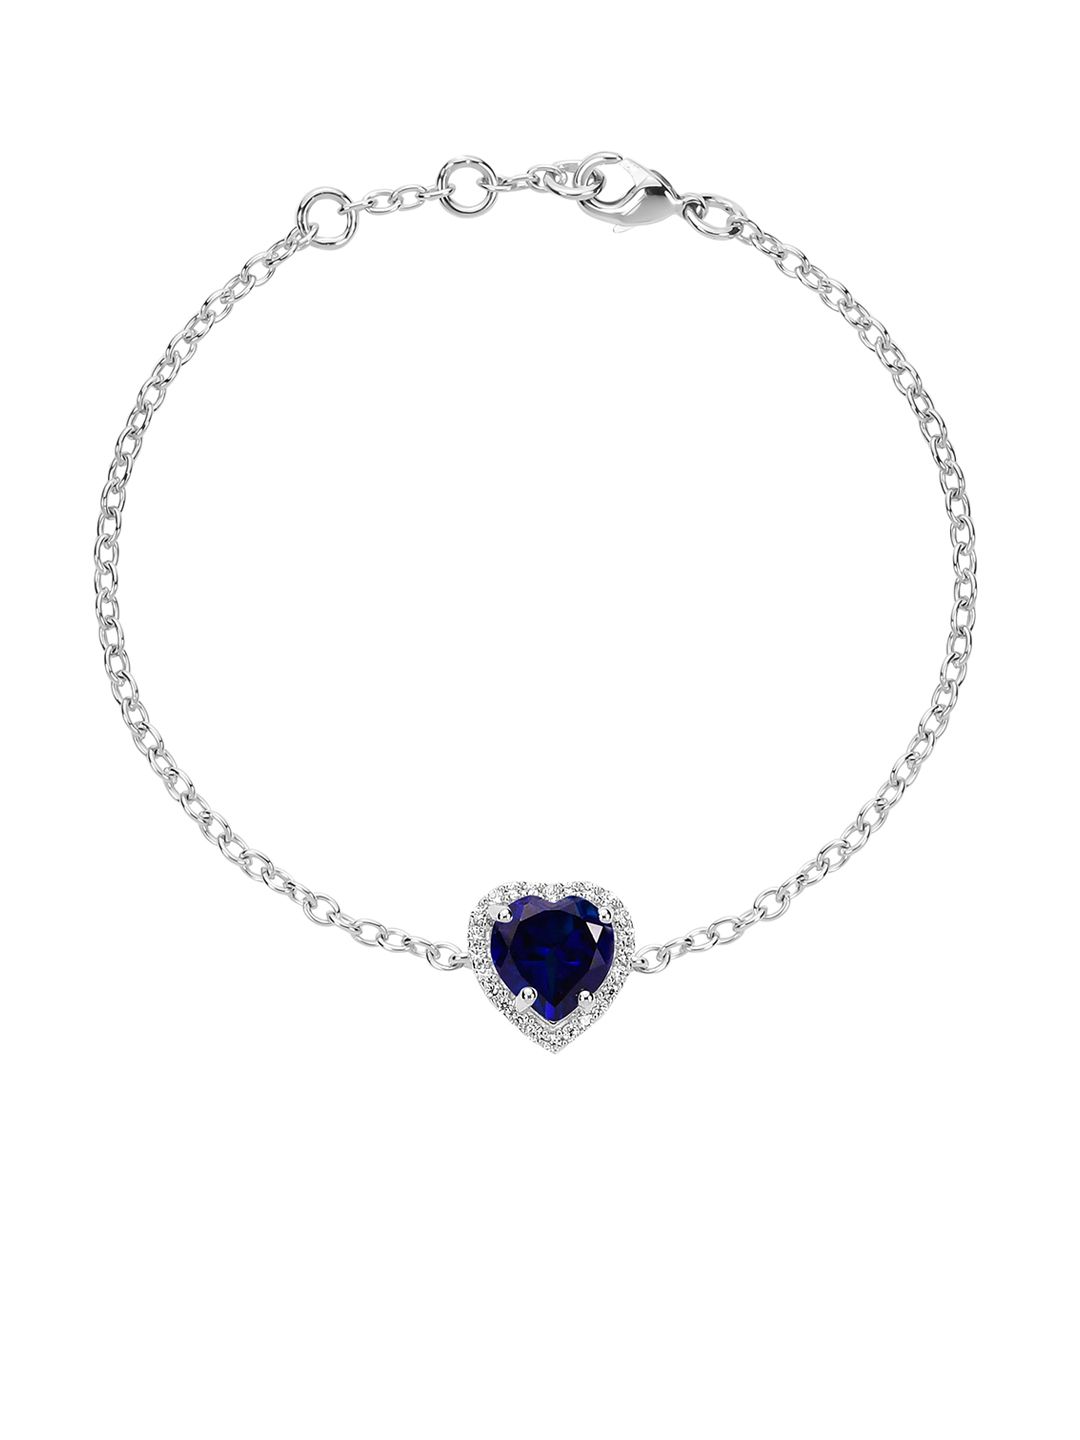 LA SOULA Unisex Blue & Silver-Toned 925 Sterling Silver Wraparound Bracelet Price in India